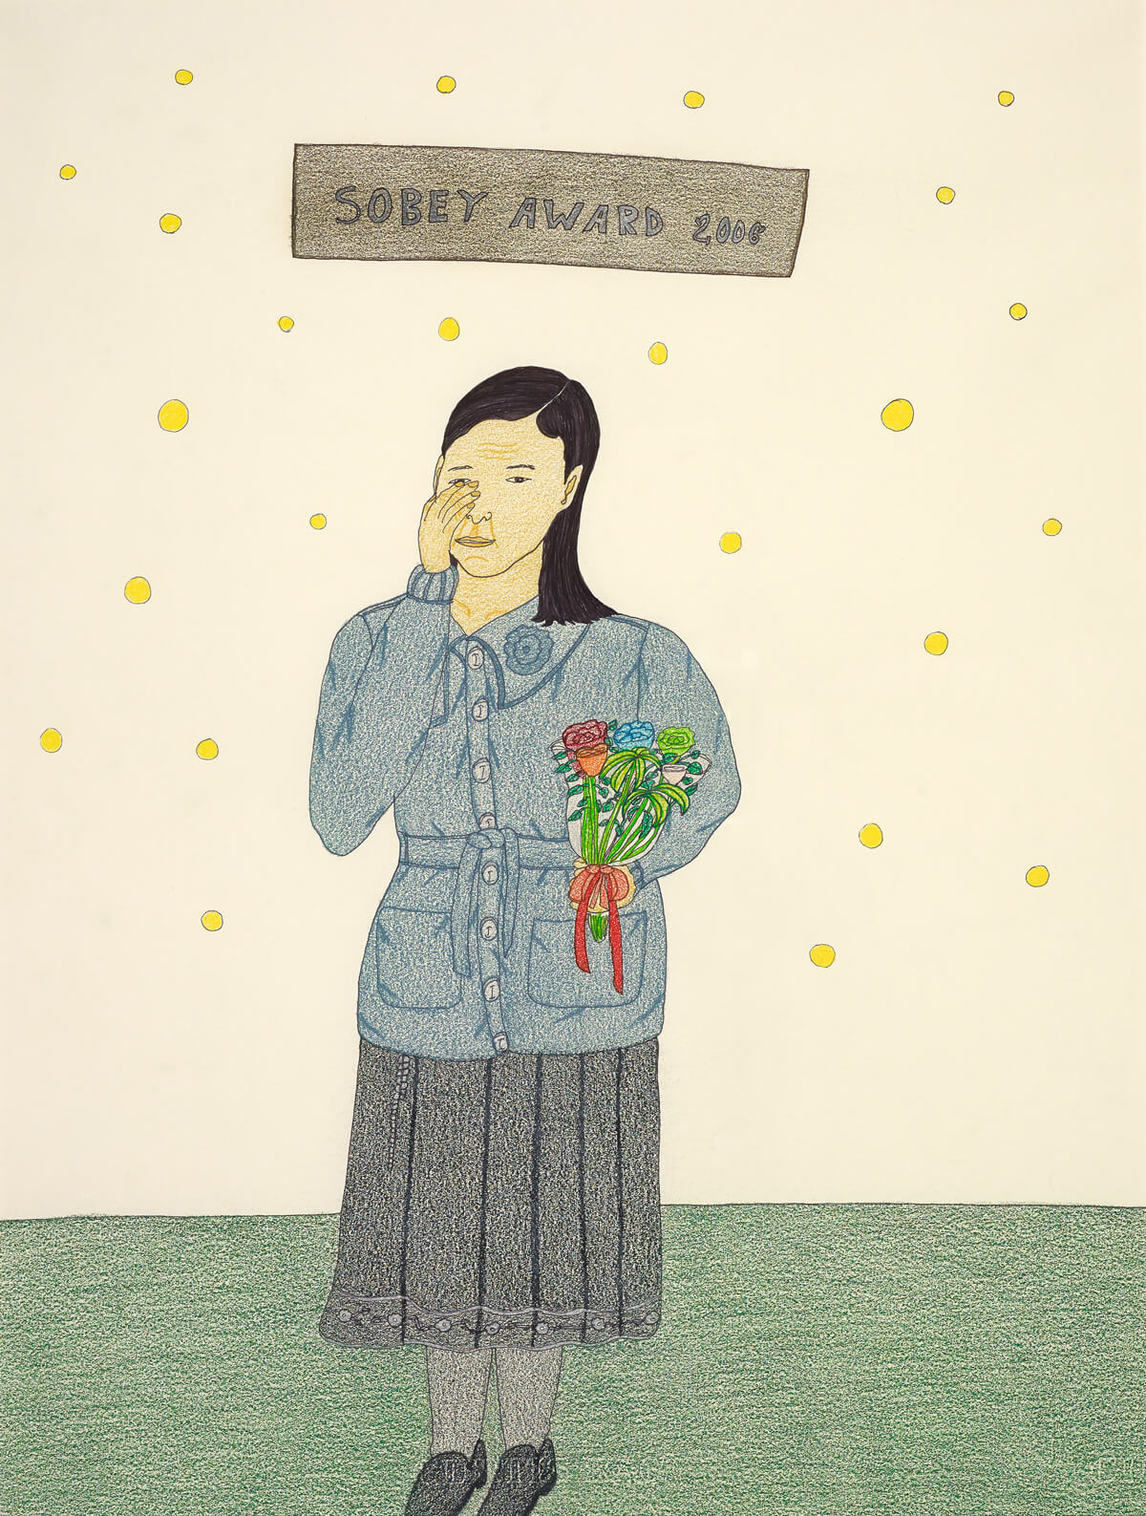 Annie Pootoogook, Sobey Award 2006 (Le Prix Sobey 2006), 2007